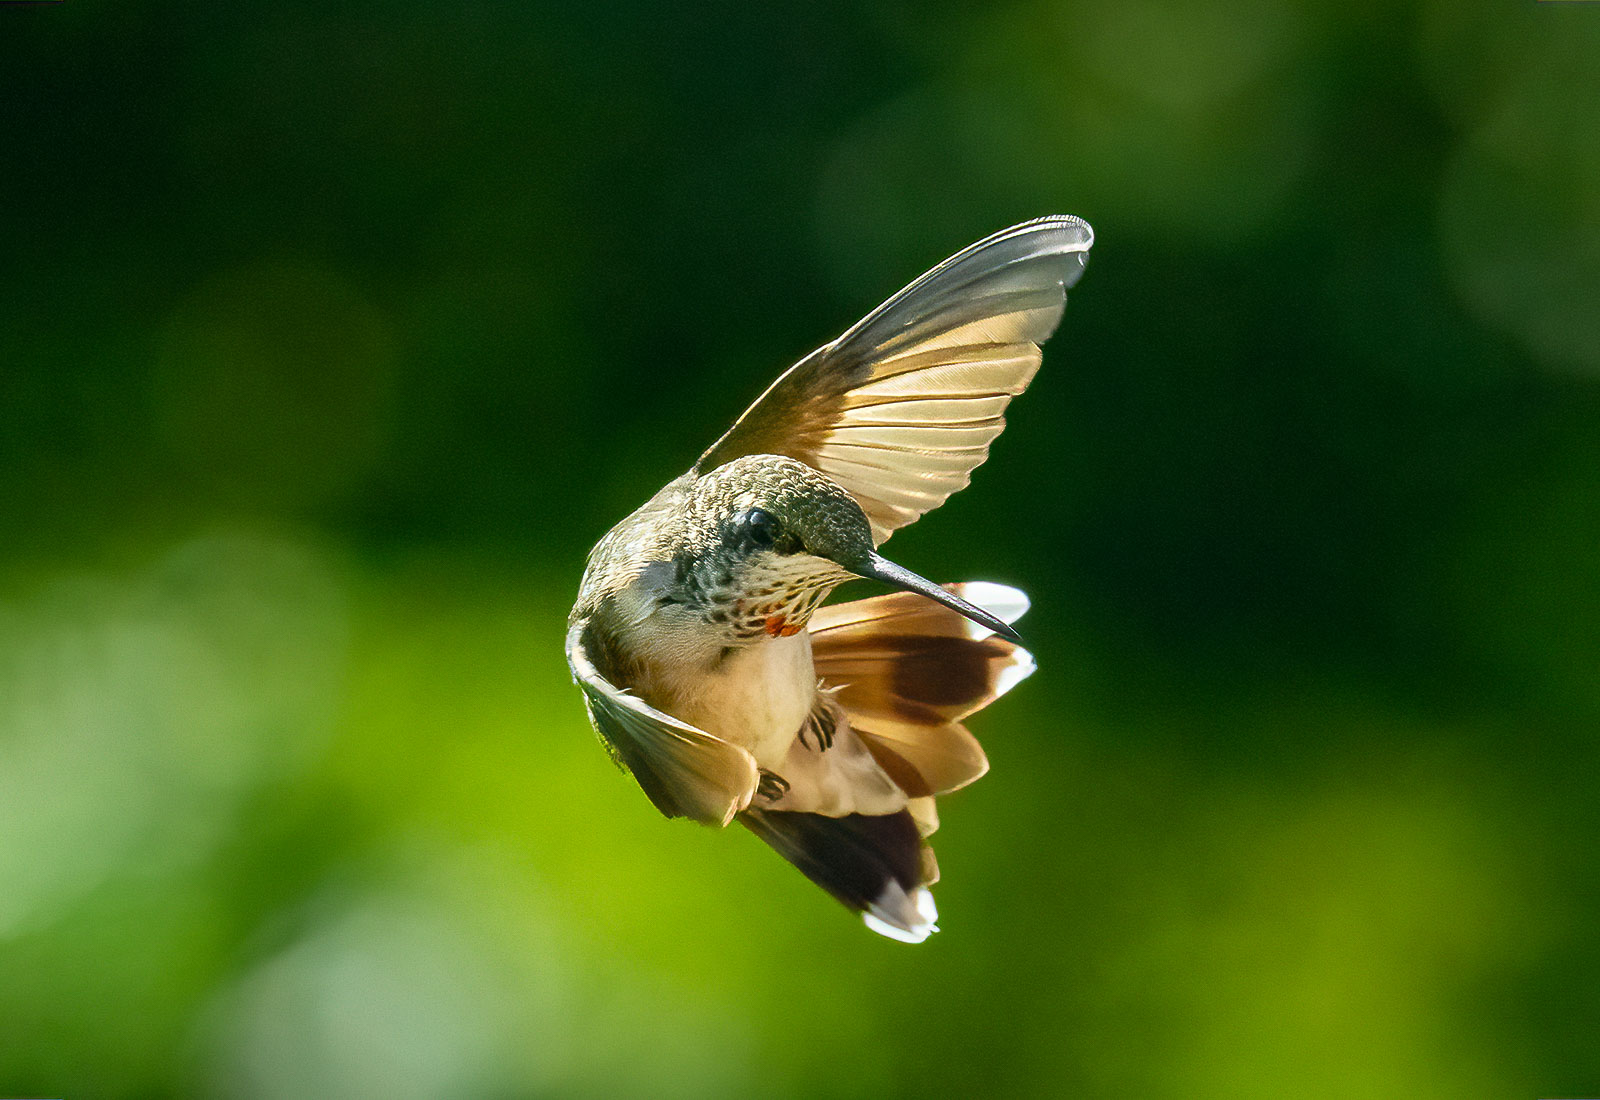 Juvenile Male Ruby-throated Hummingbird in flight